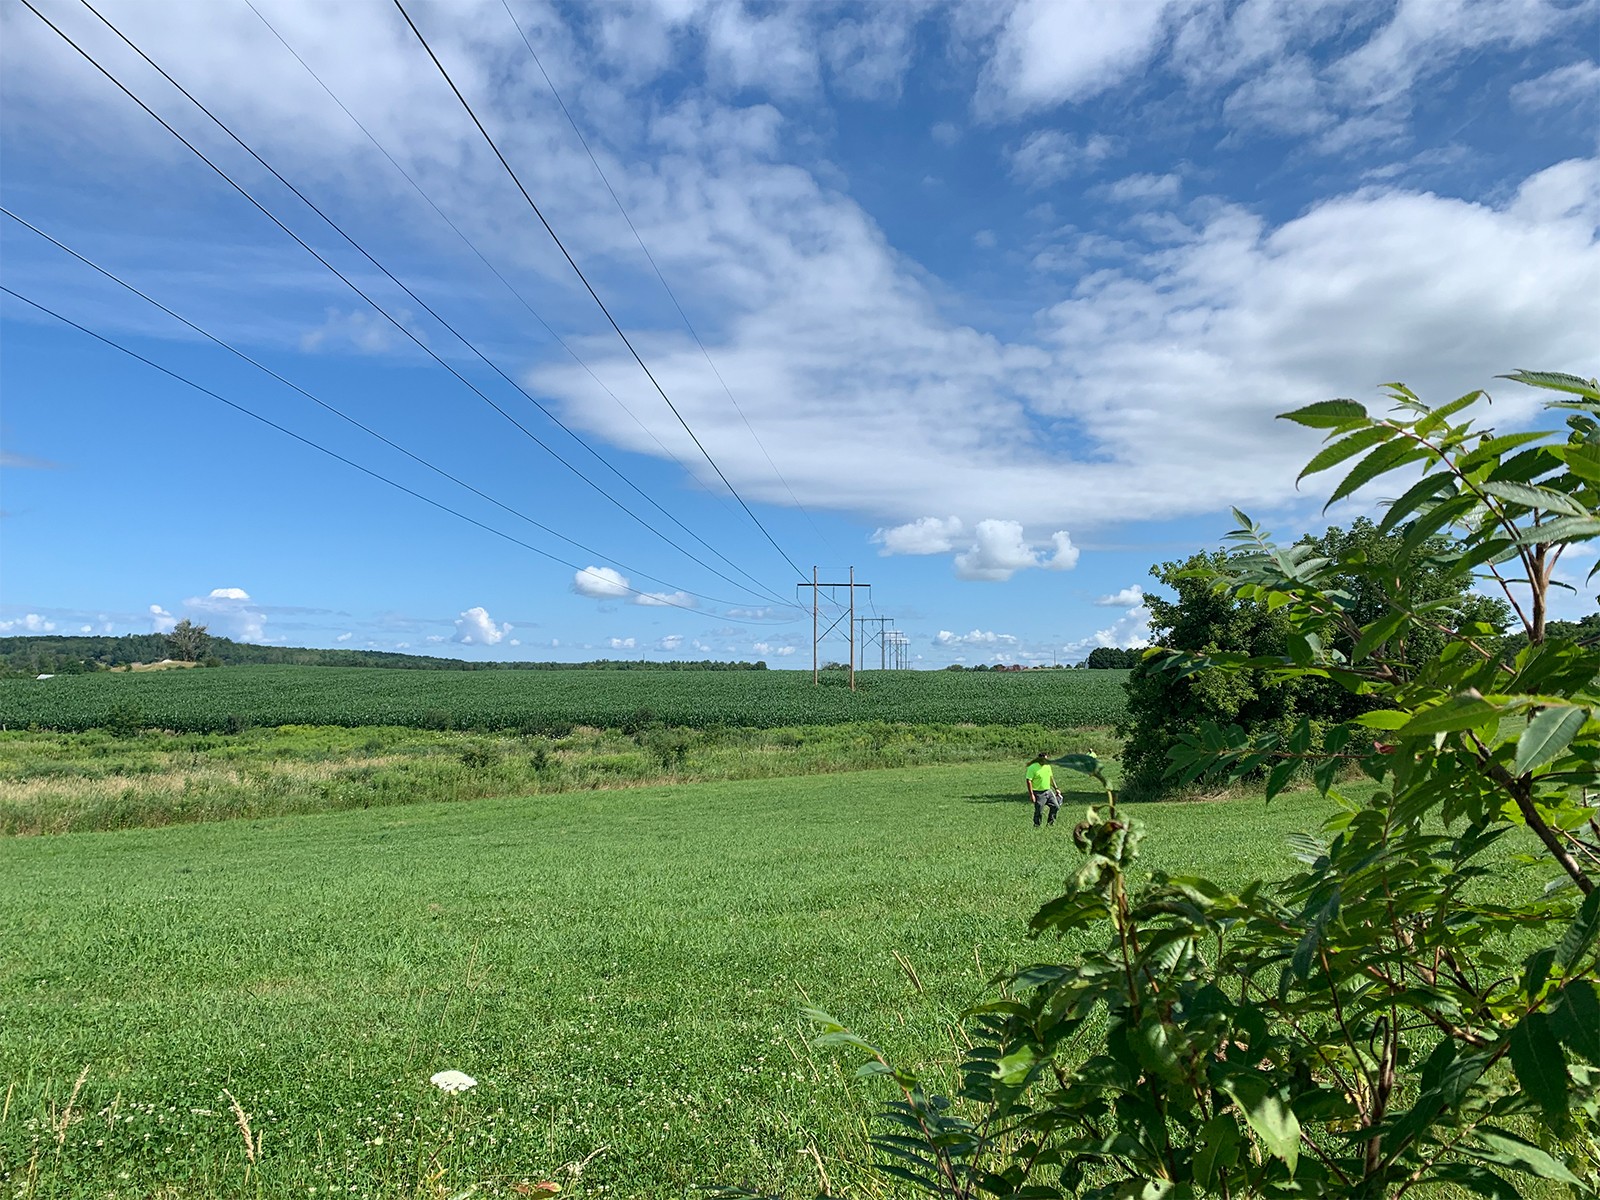 Franklin County power lines landscape